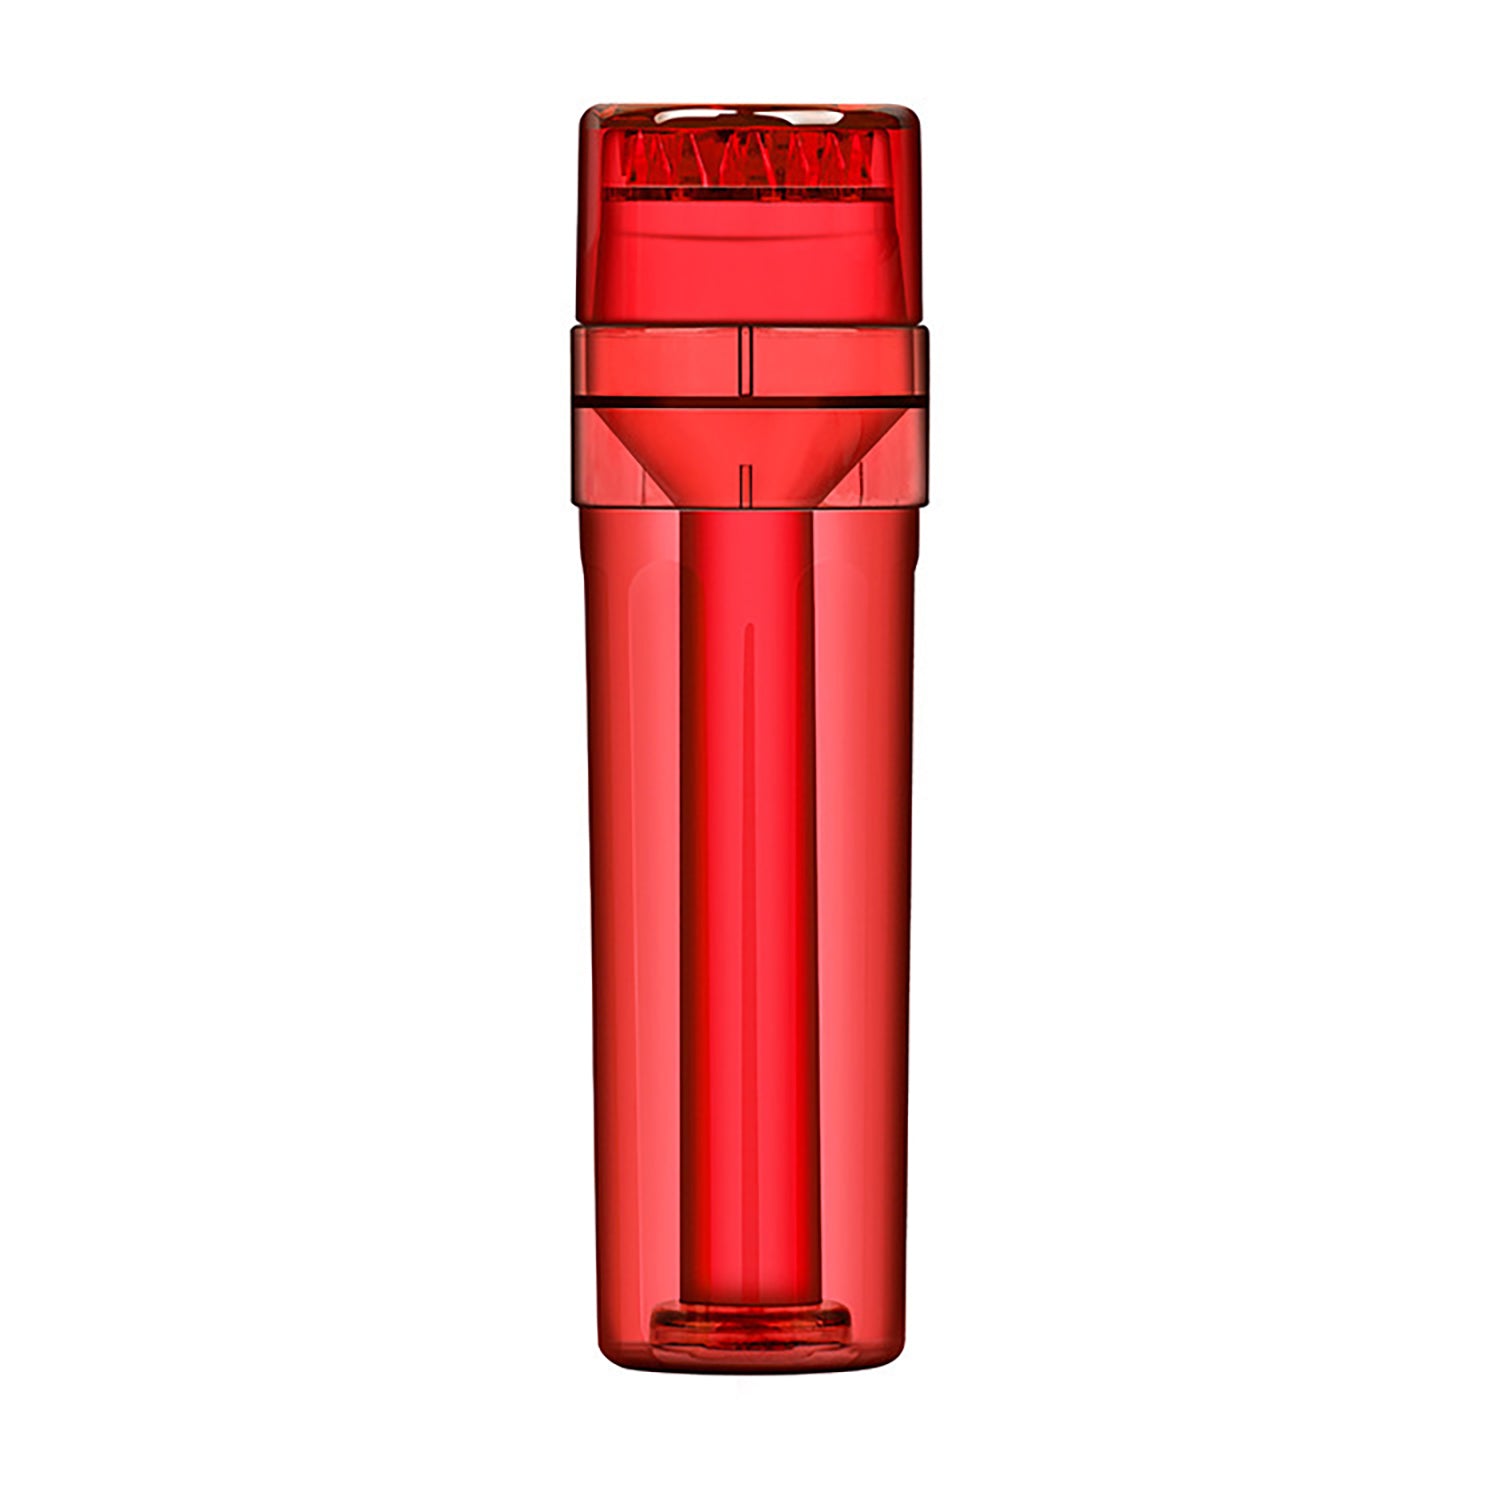 Longmada Plastic Manual Grinder for Tobacco, Red (1 Pcs)